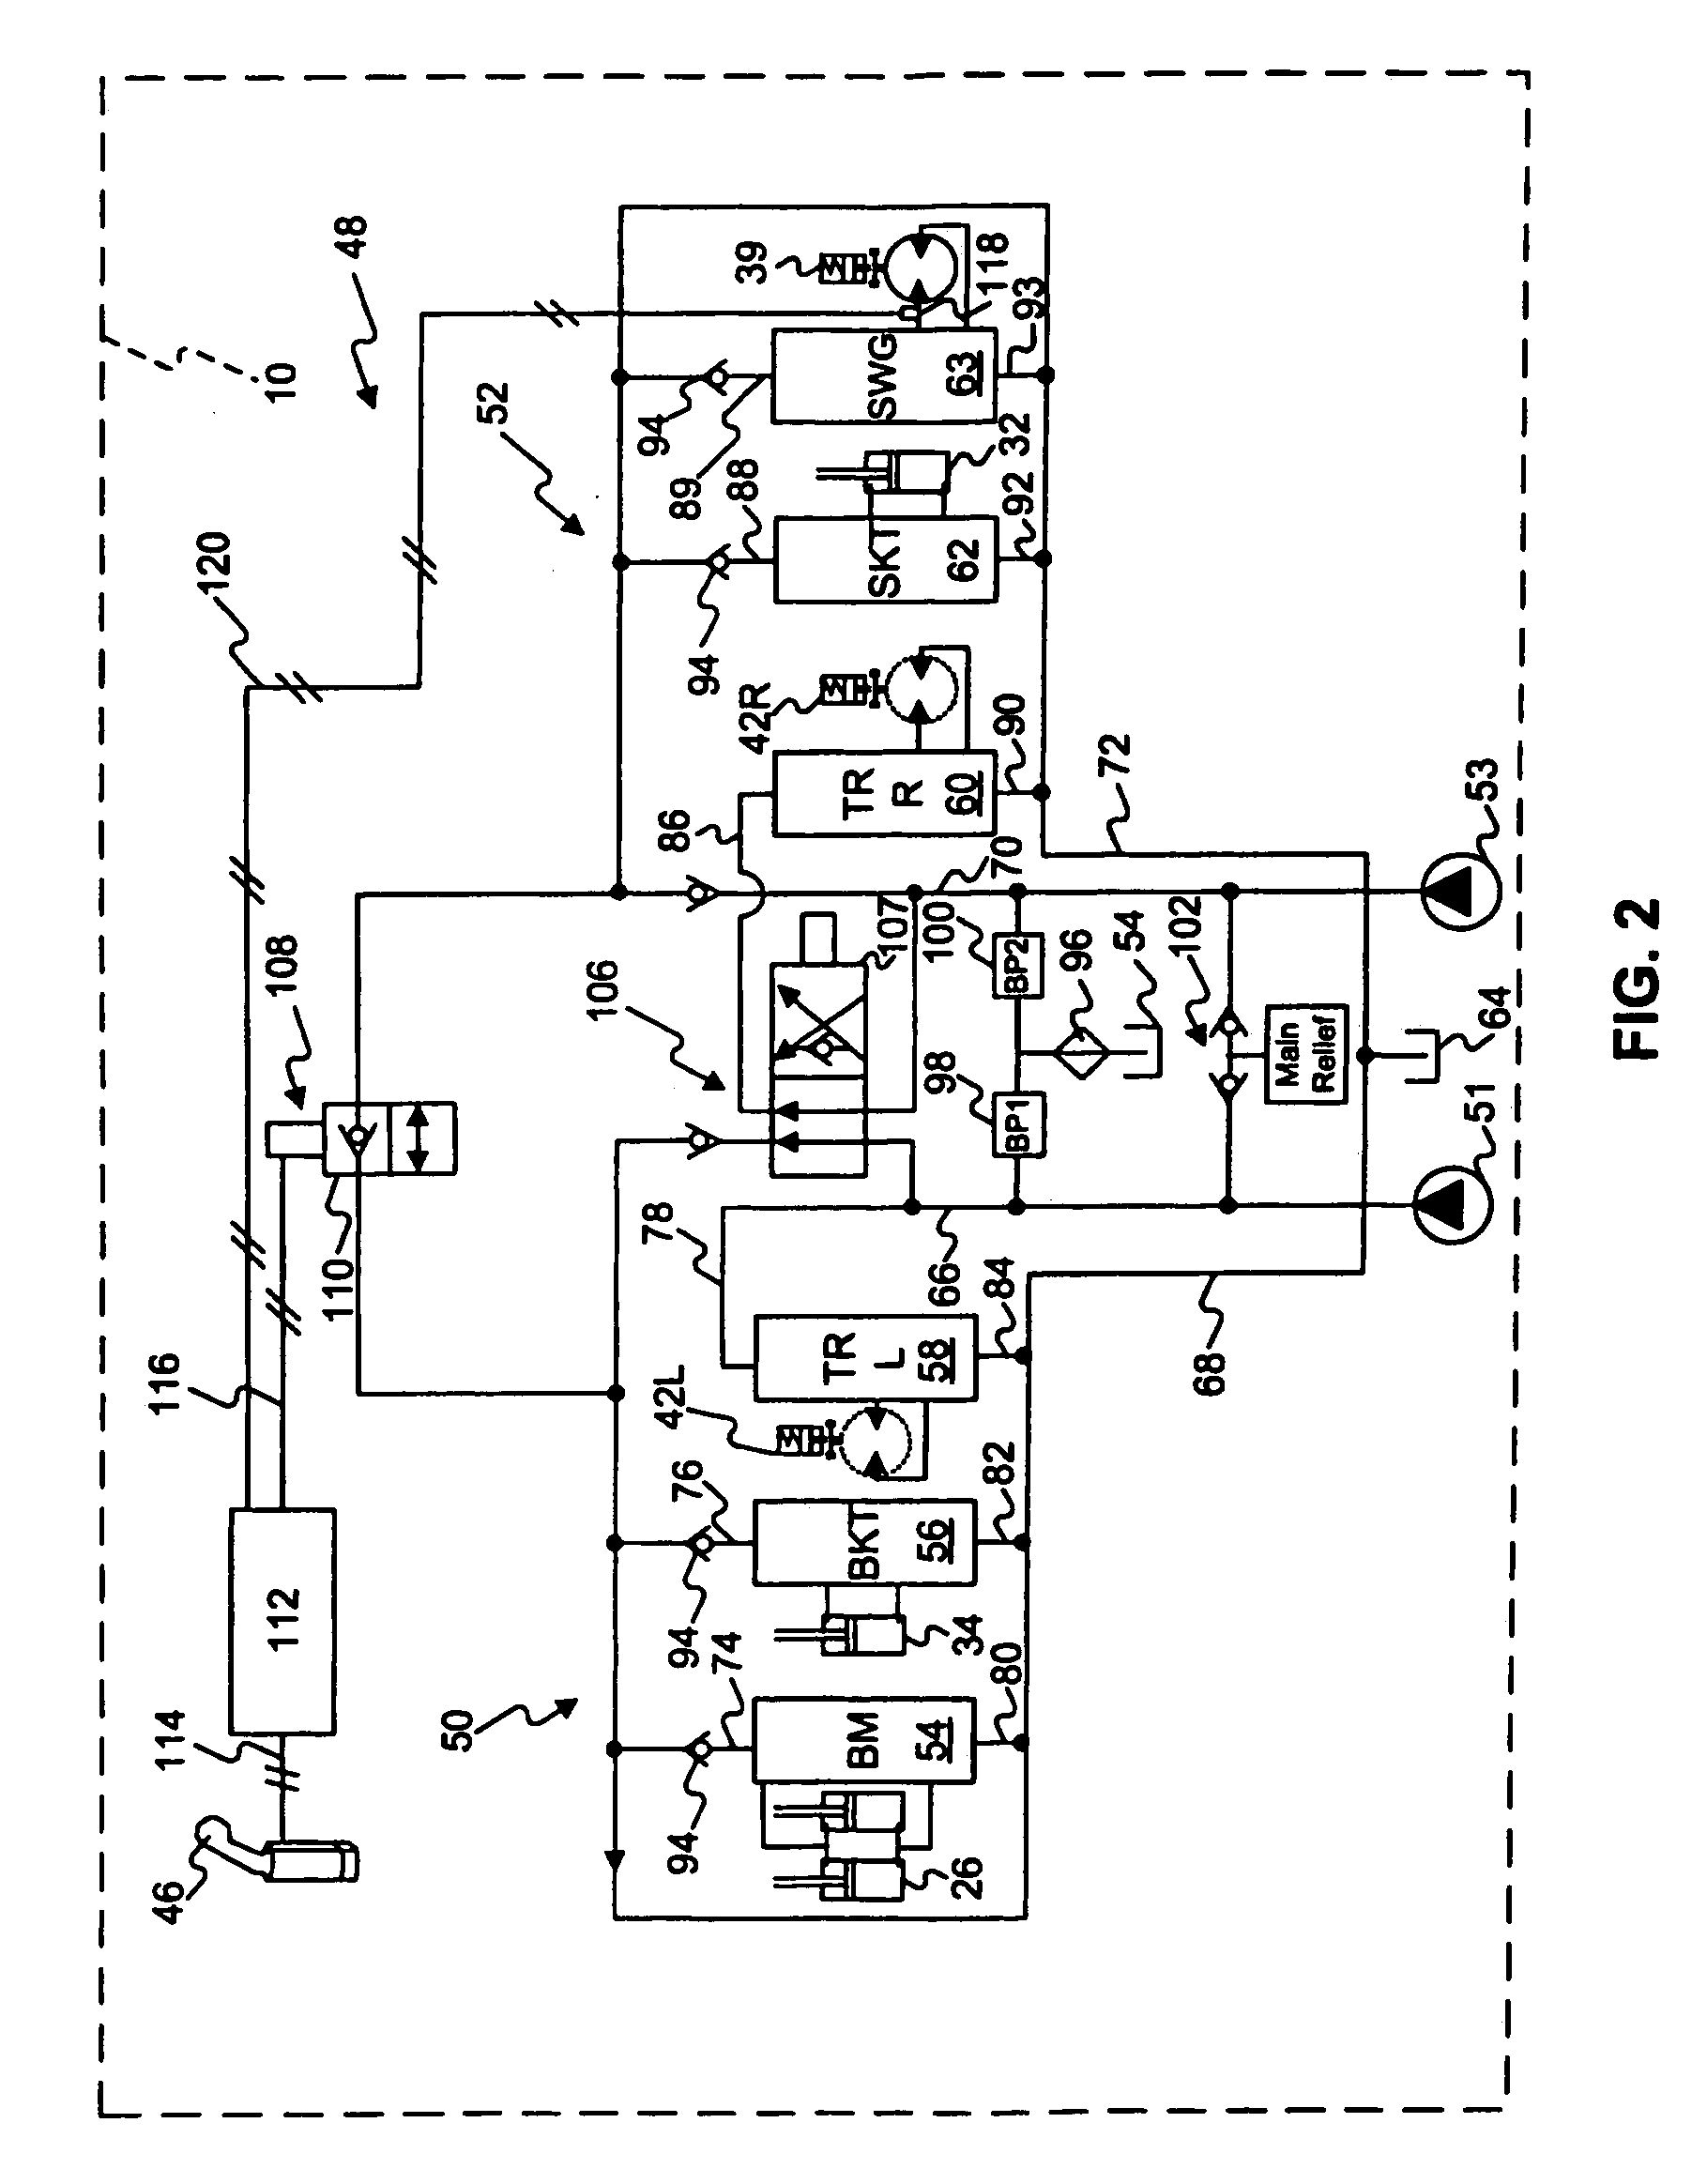 Multi-actuator pressure-based flow control system